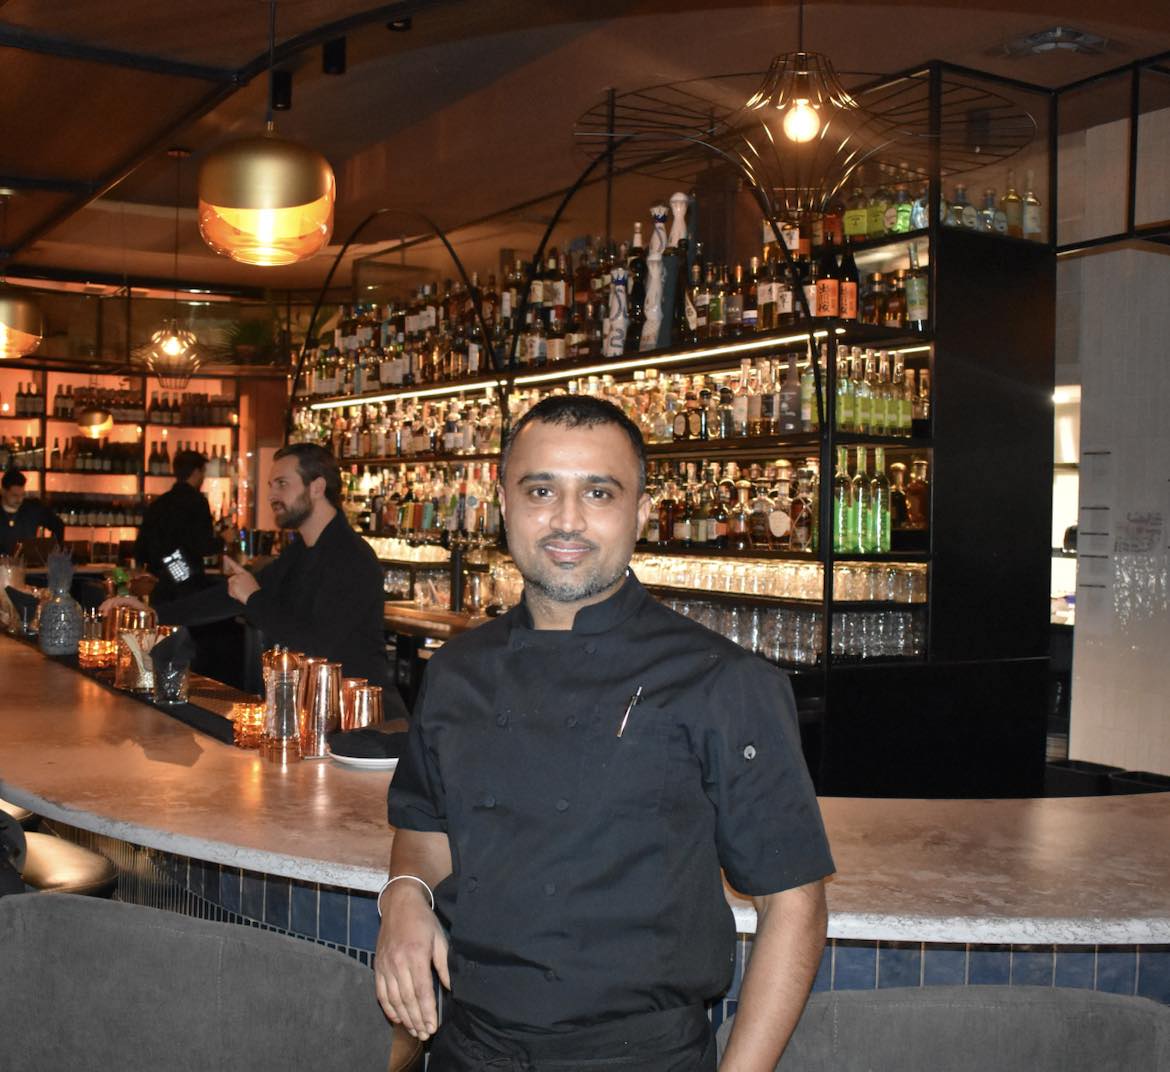 Chef Inderjeet smiling at upscale bar